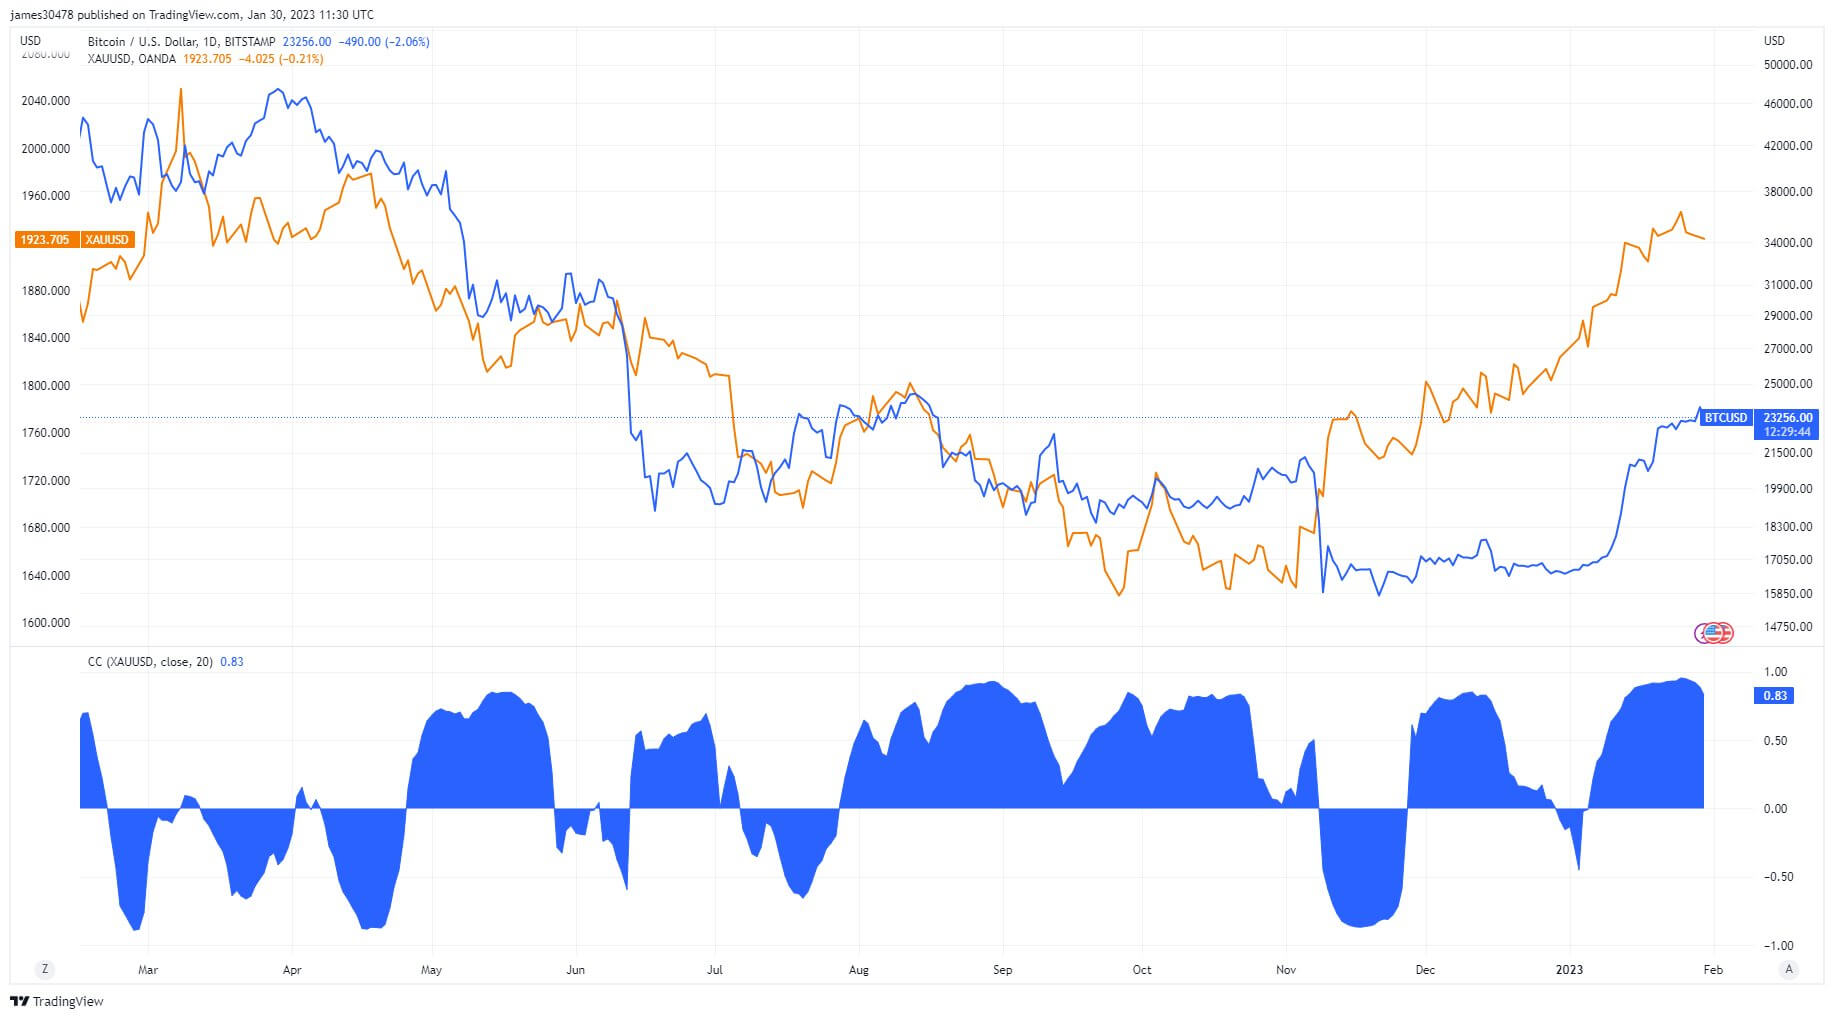 Correlation between Bitcoin and Gold